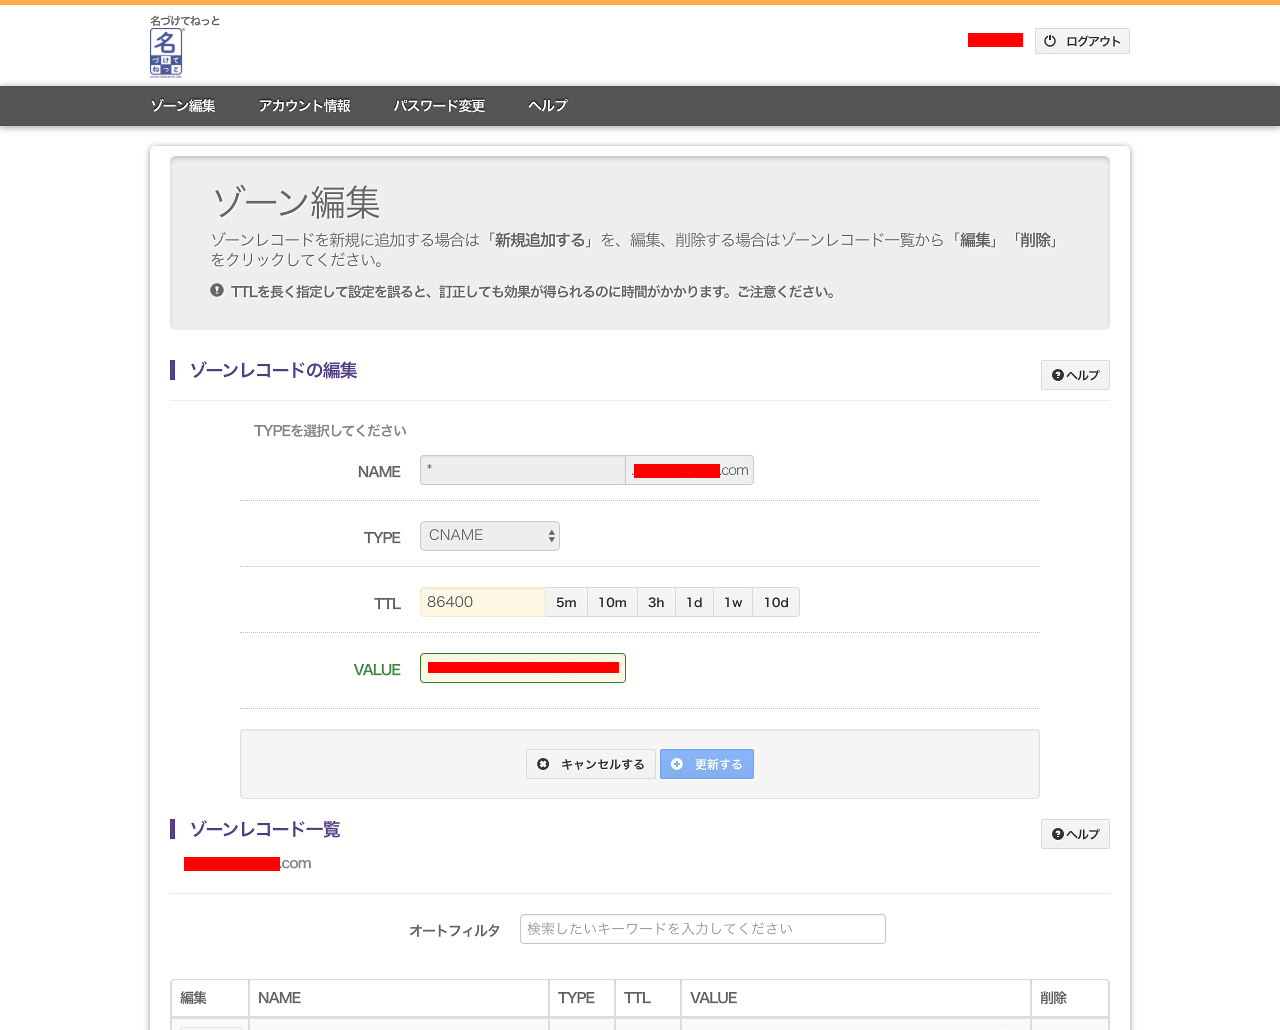 FireShot Capture 392 - ゾーン編集 - https___nadukete.online-navi.jp_dnsui_customer_user_U872411da7_zone.png